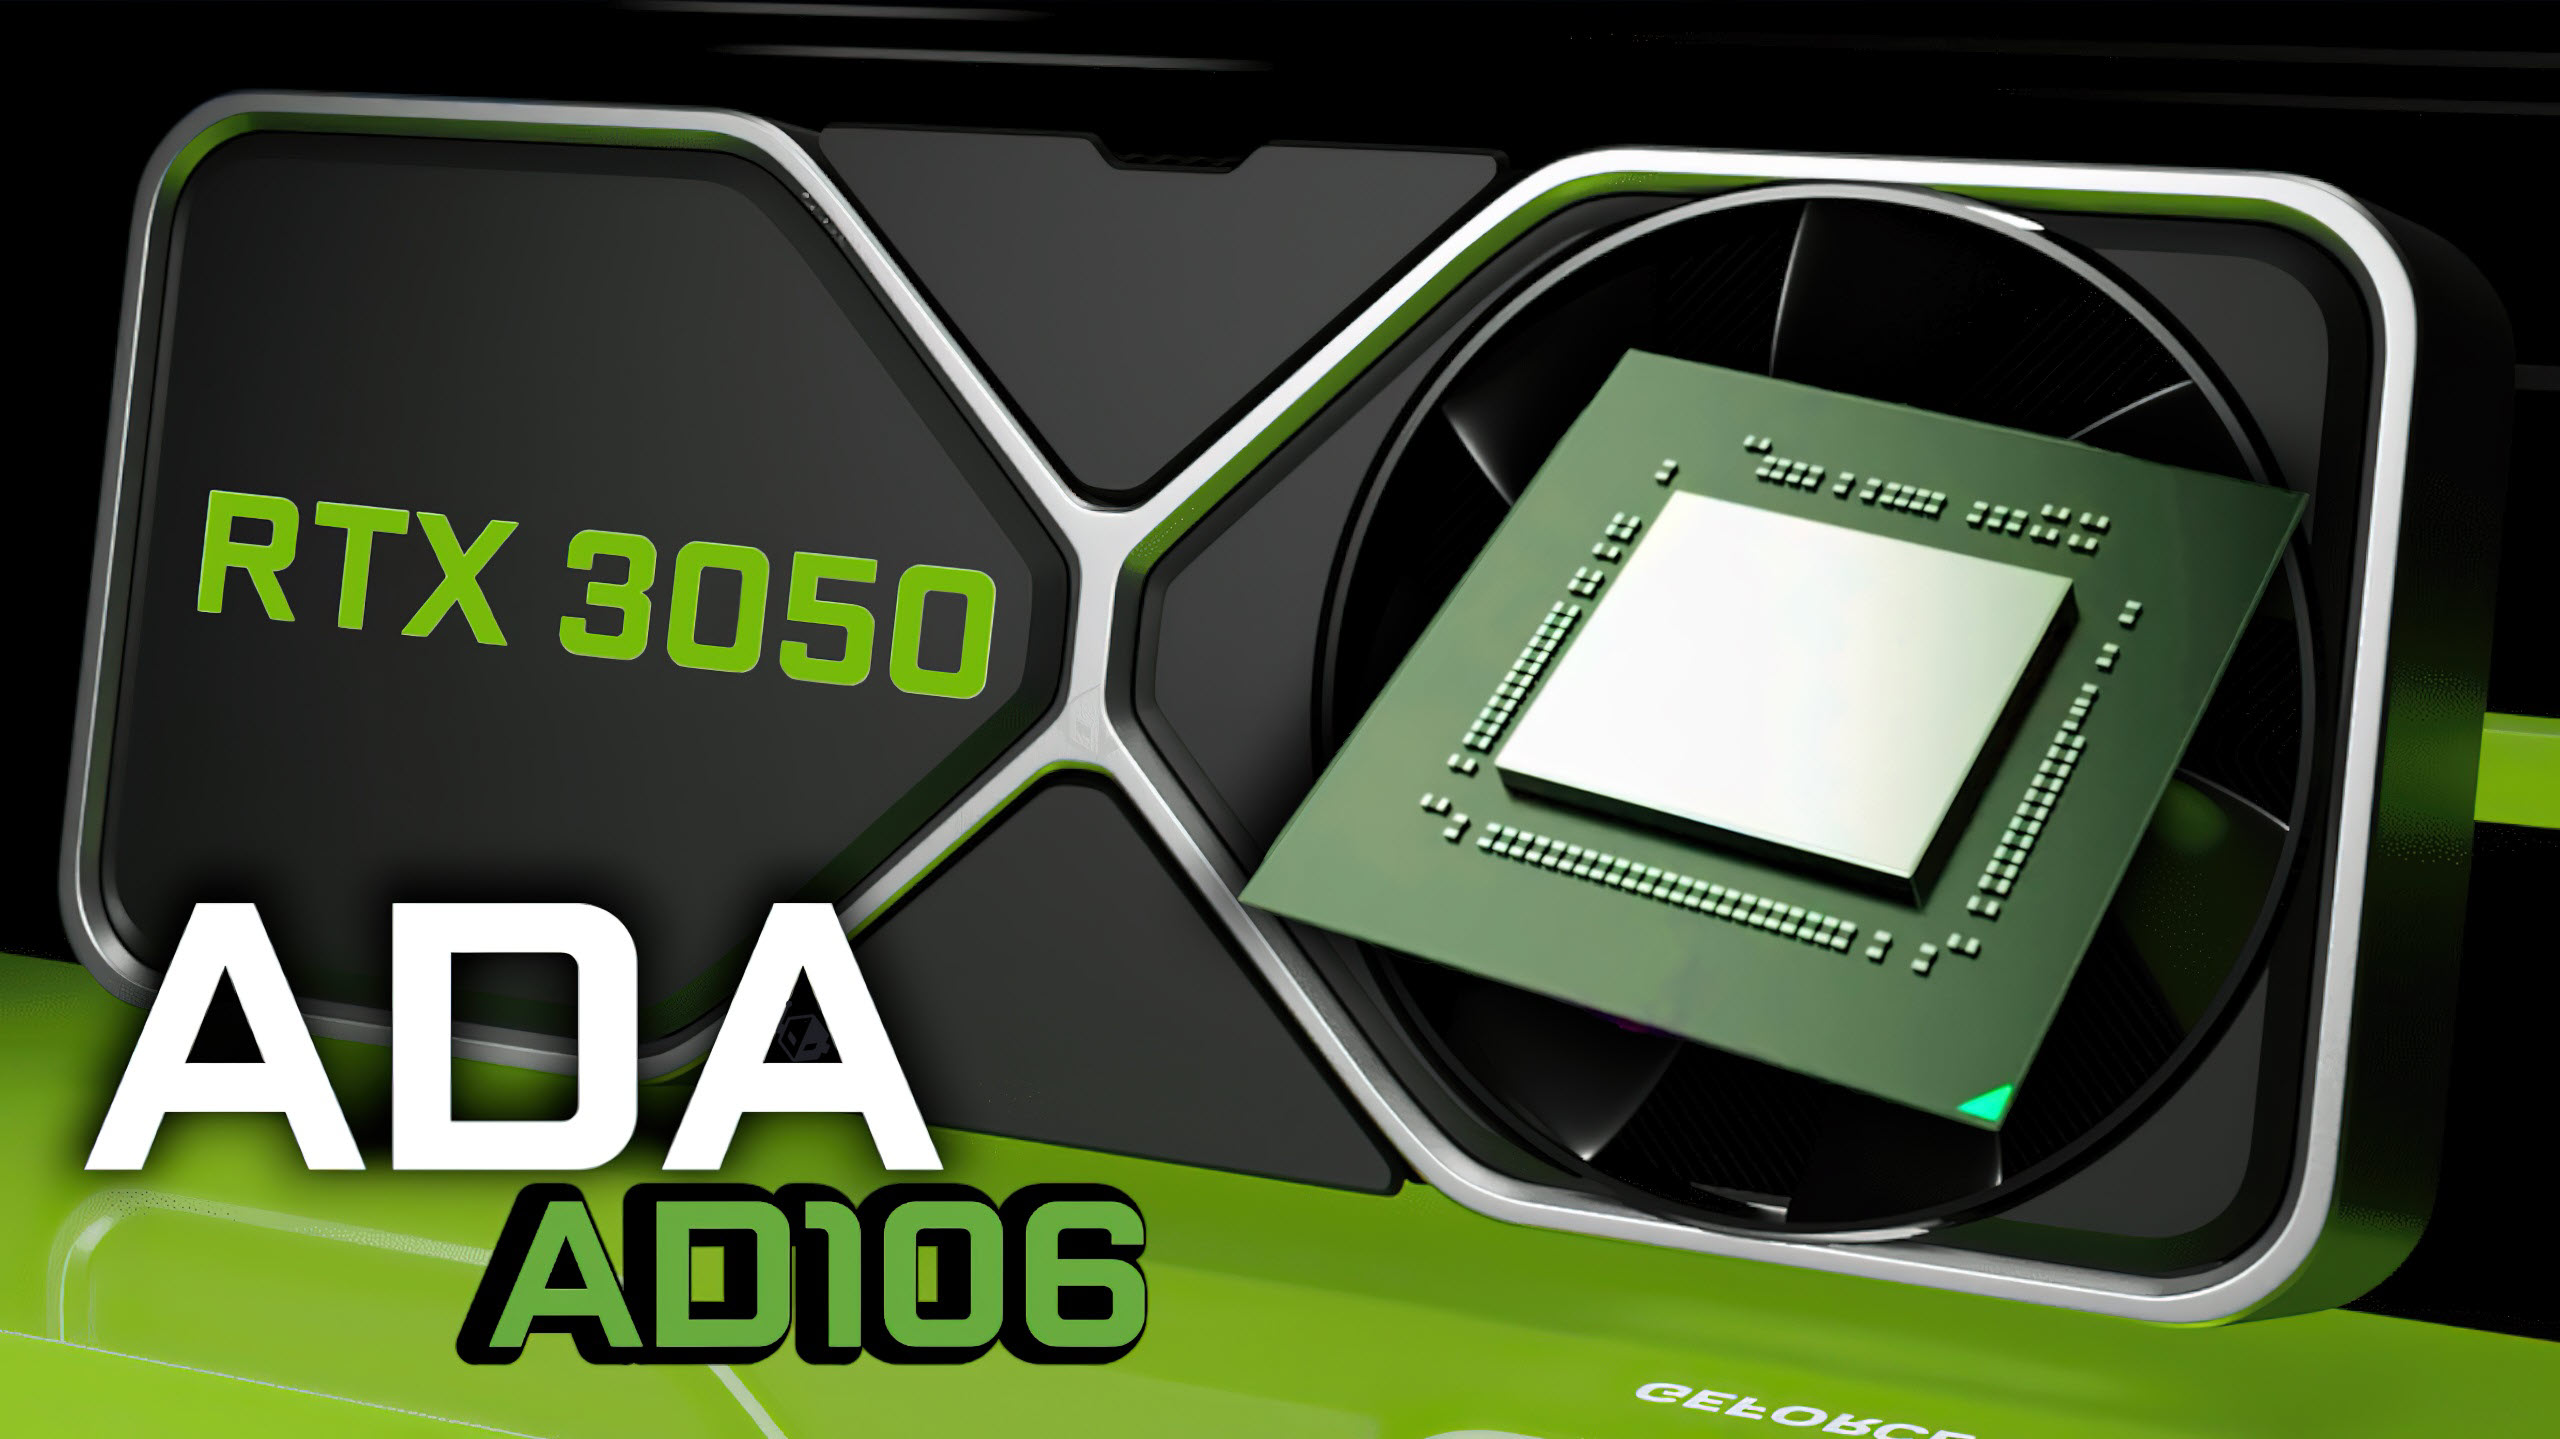 NVIDIA Readies GeForce RTX 3050 A Laptop GPU، دارای تراشه AD106 “Ada”